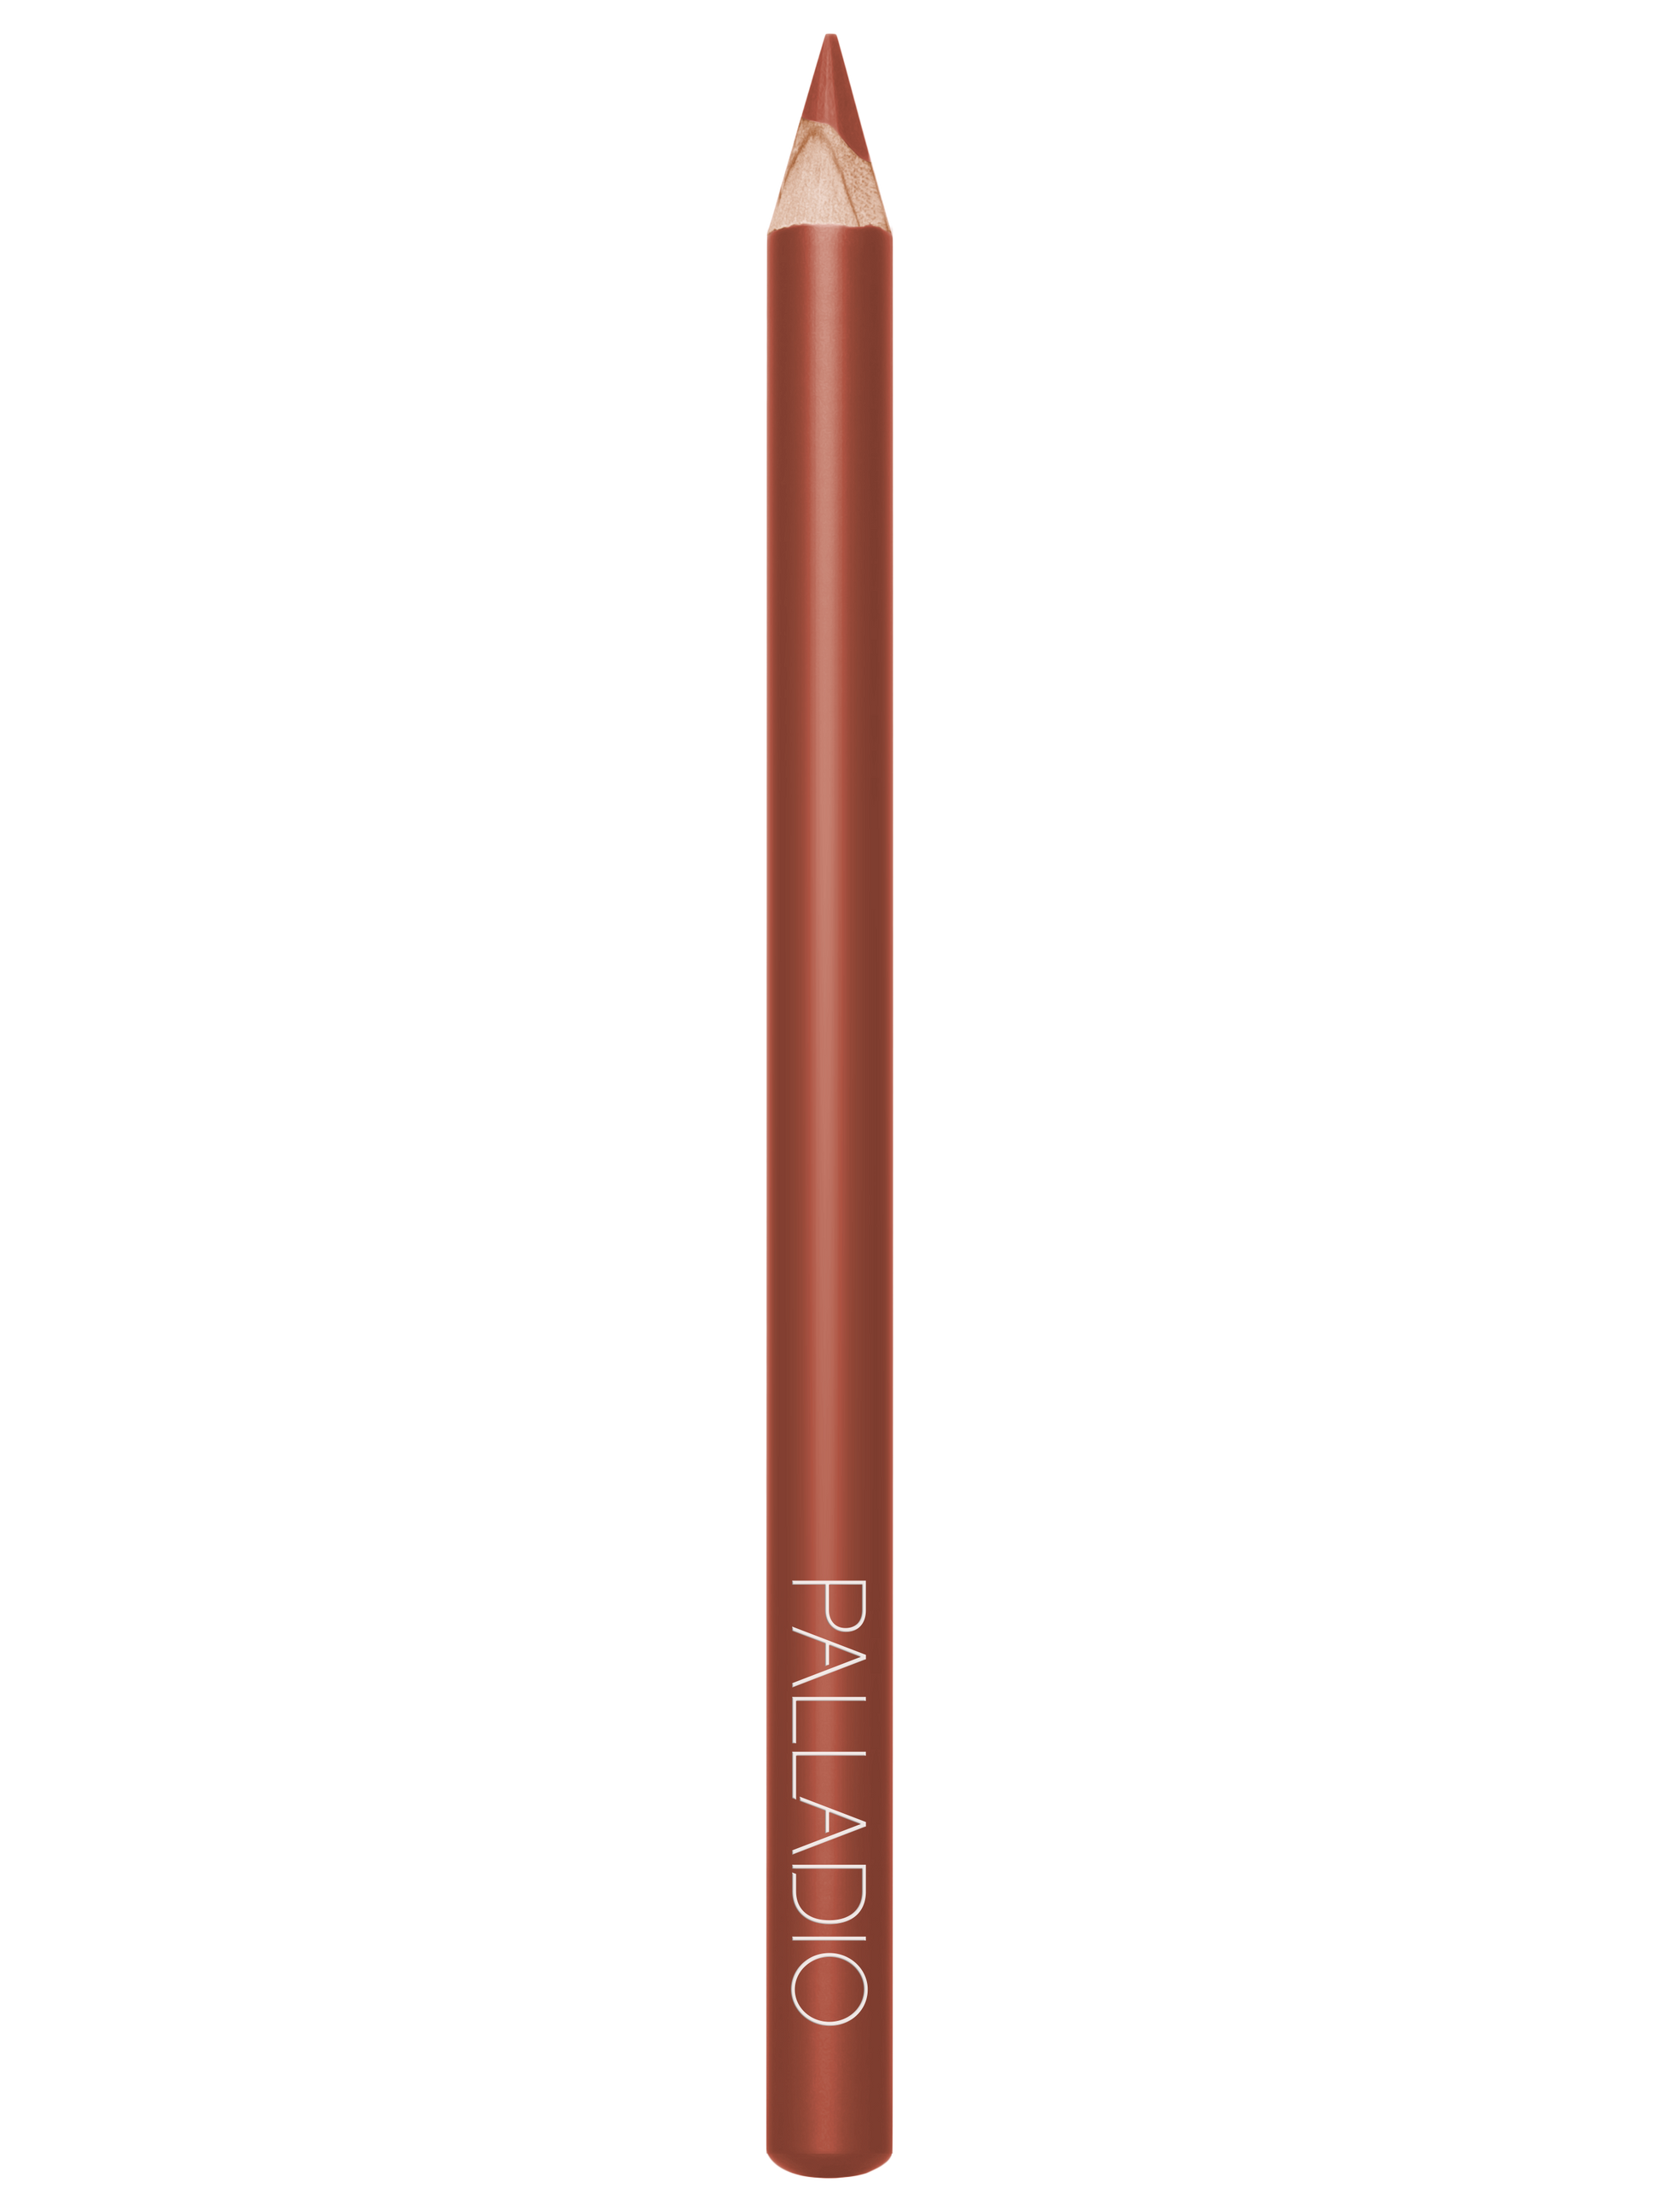 Palladio Lipstick Liner PencilLip LinerPALLADIOColor: Nutmeg Ll278